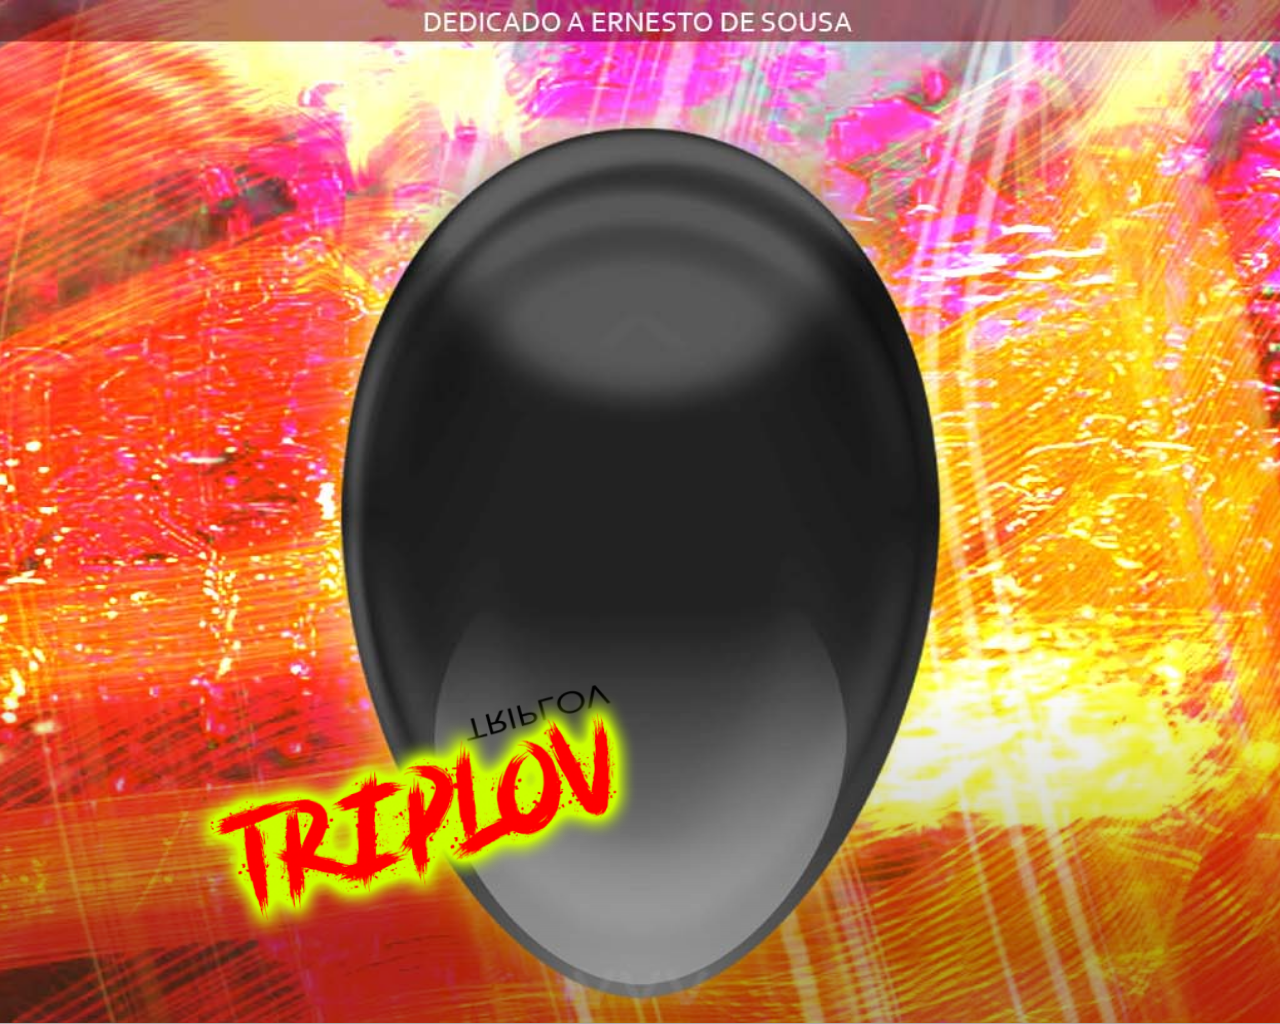 triplov.com